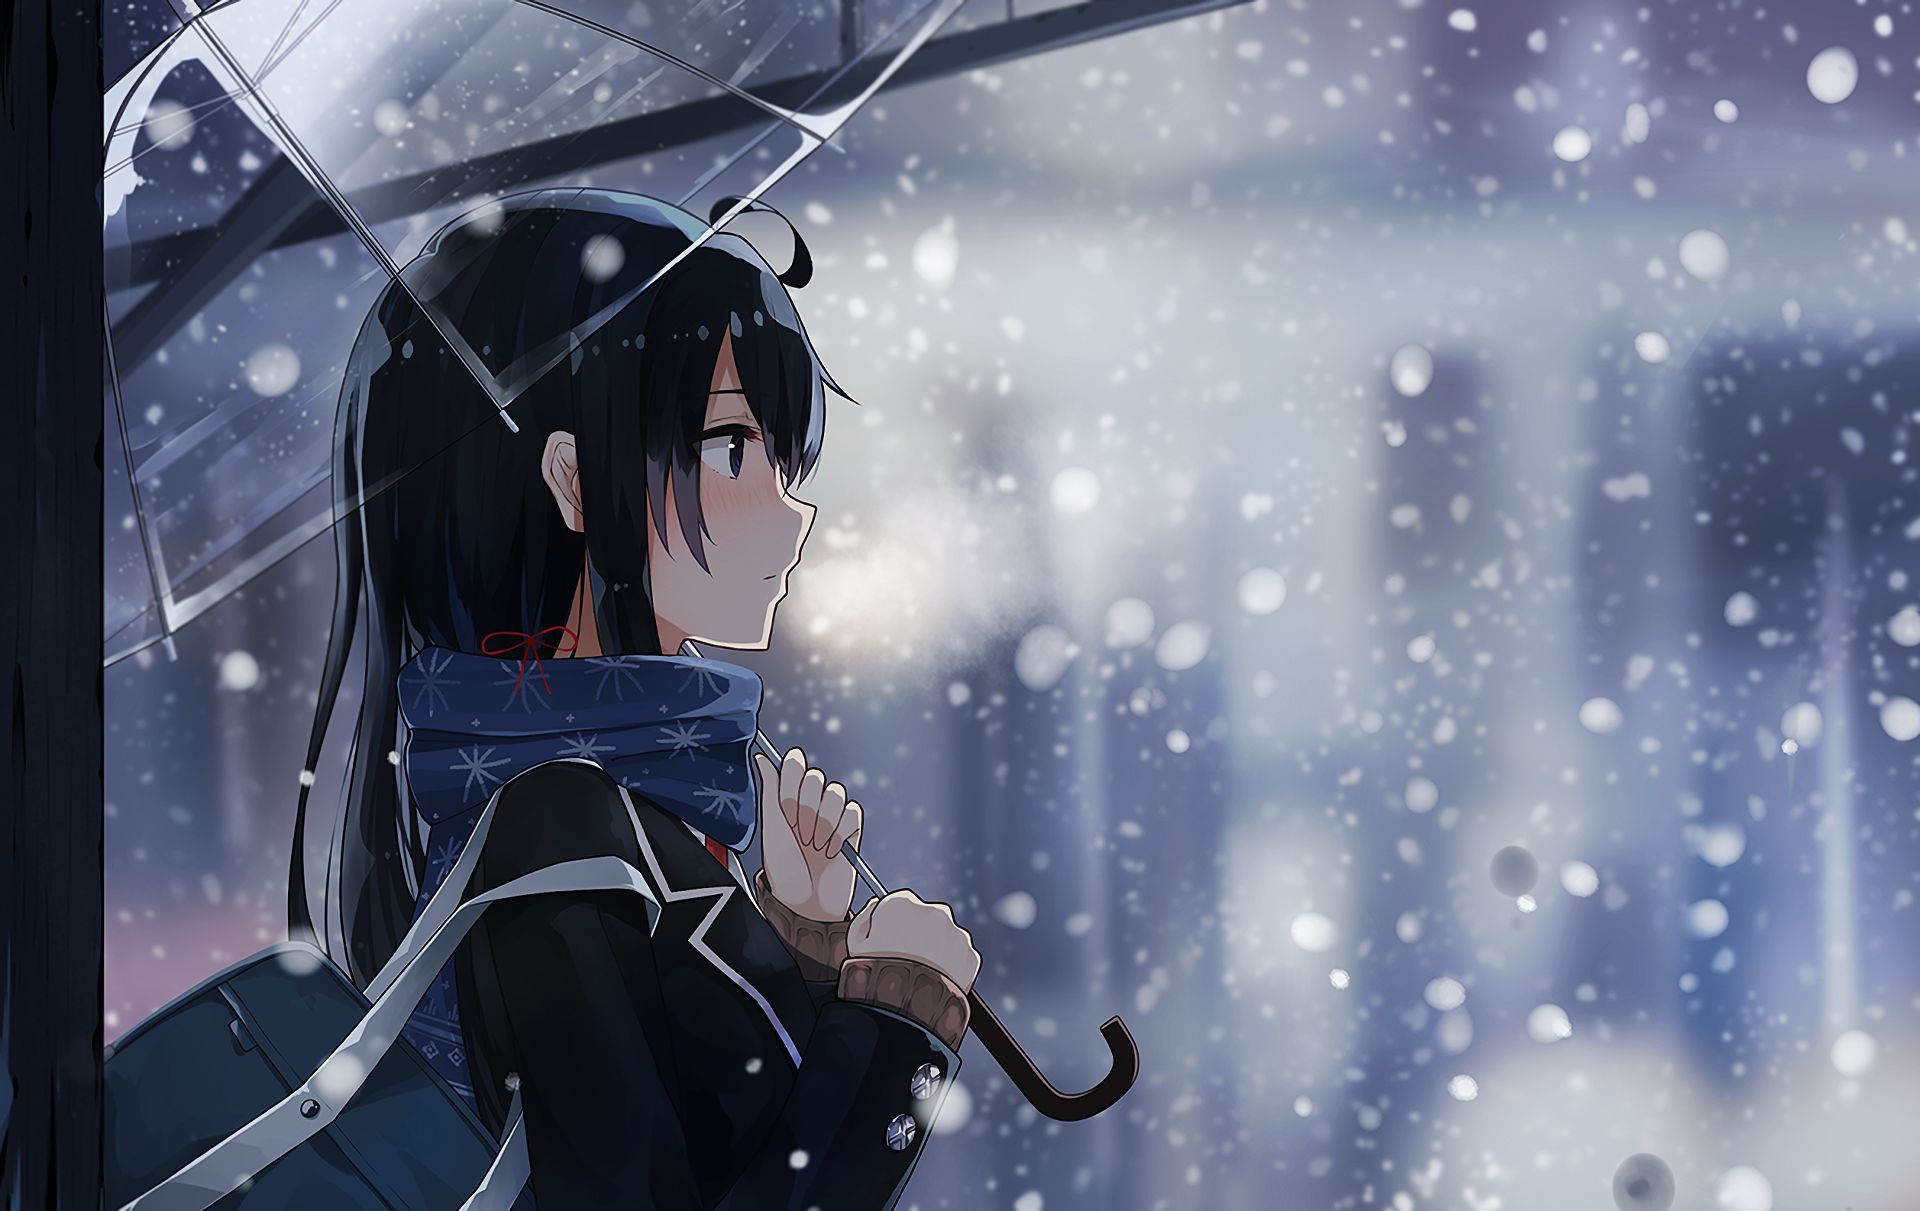 724399 Hintergrundbild herunterladen schneefall, animes, yahari ore no seishun rabukome wa machigatteiru, regenschirm, yukino yukinoshita - Bildschirmschoner und Bilder kostenlos